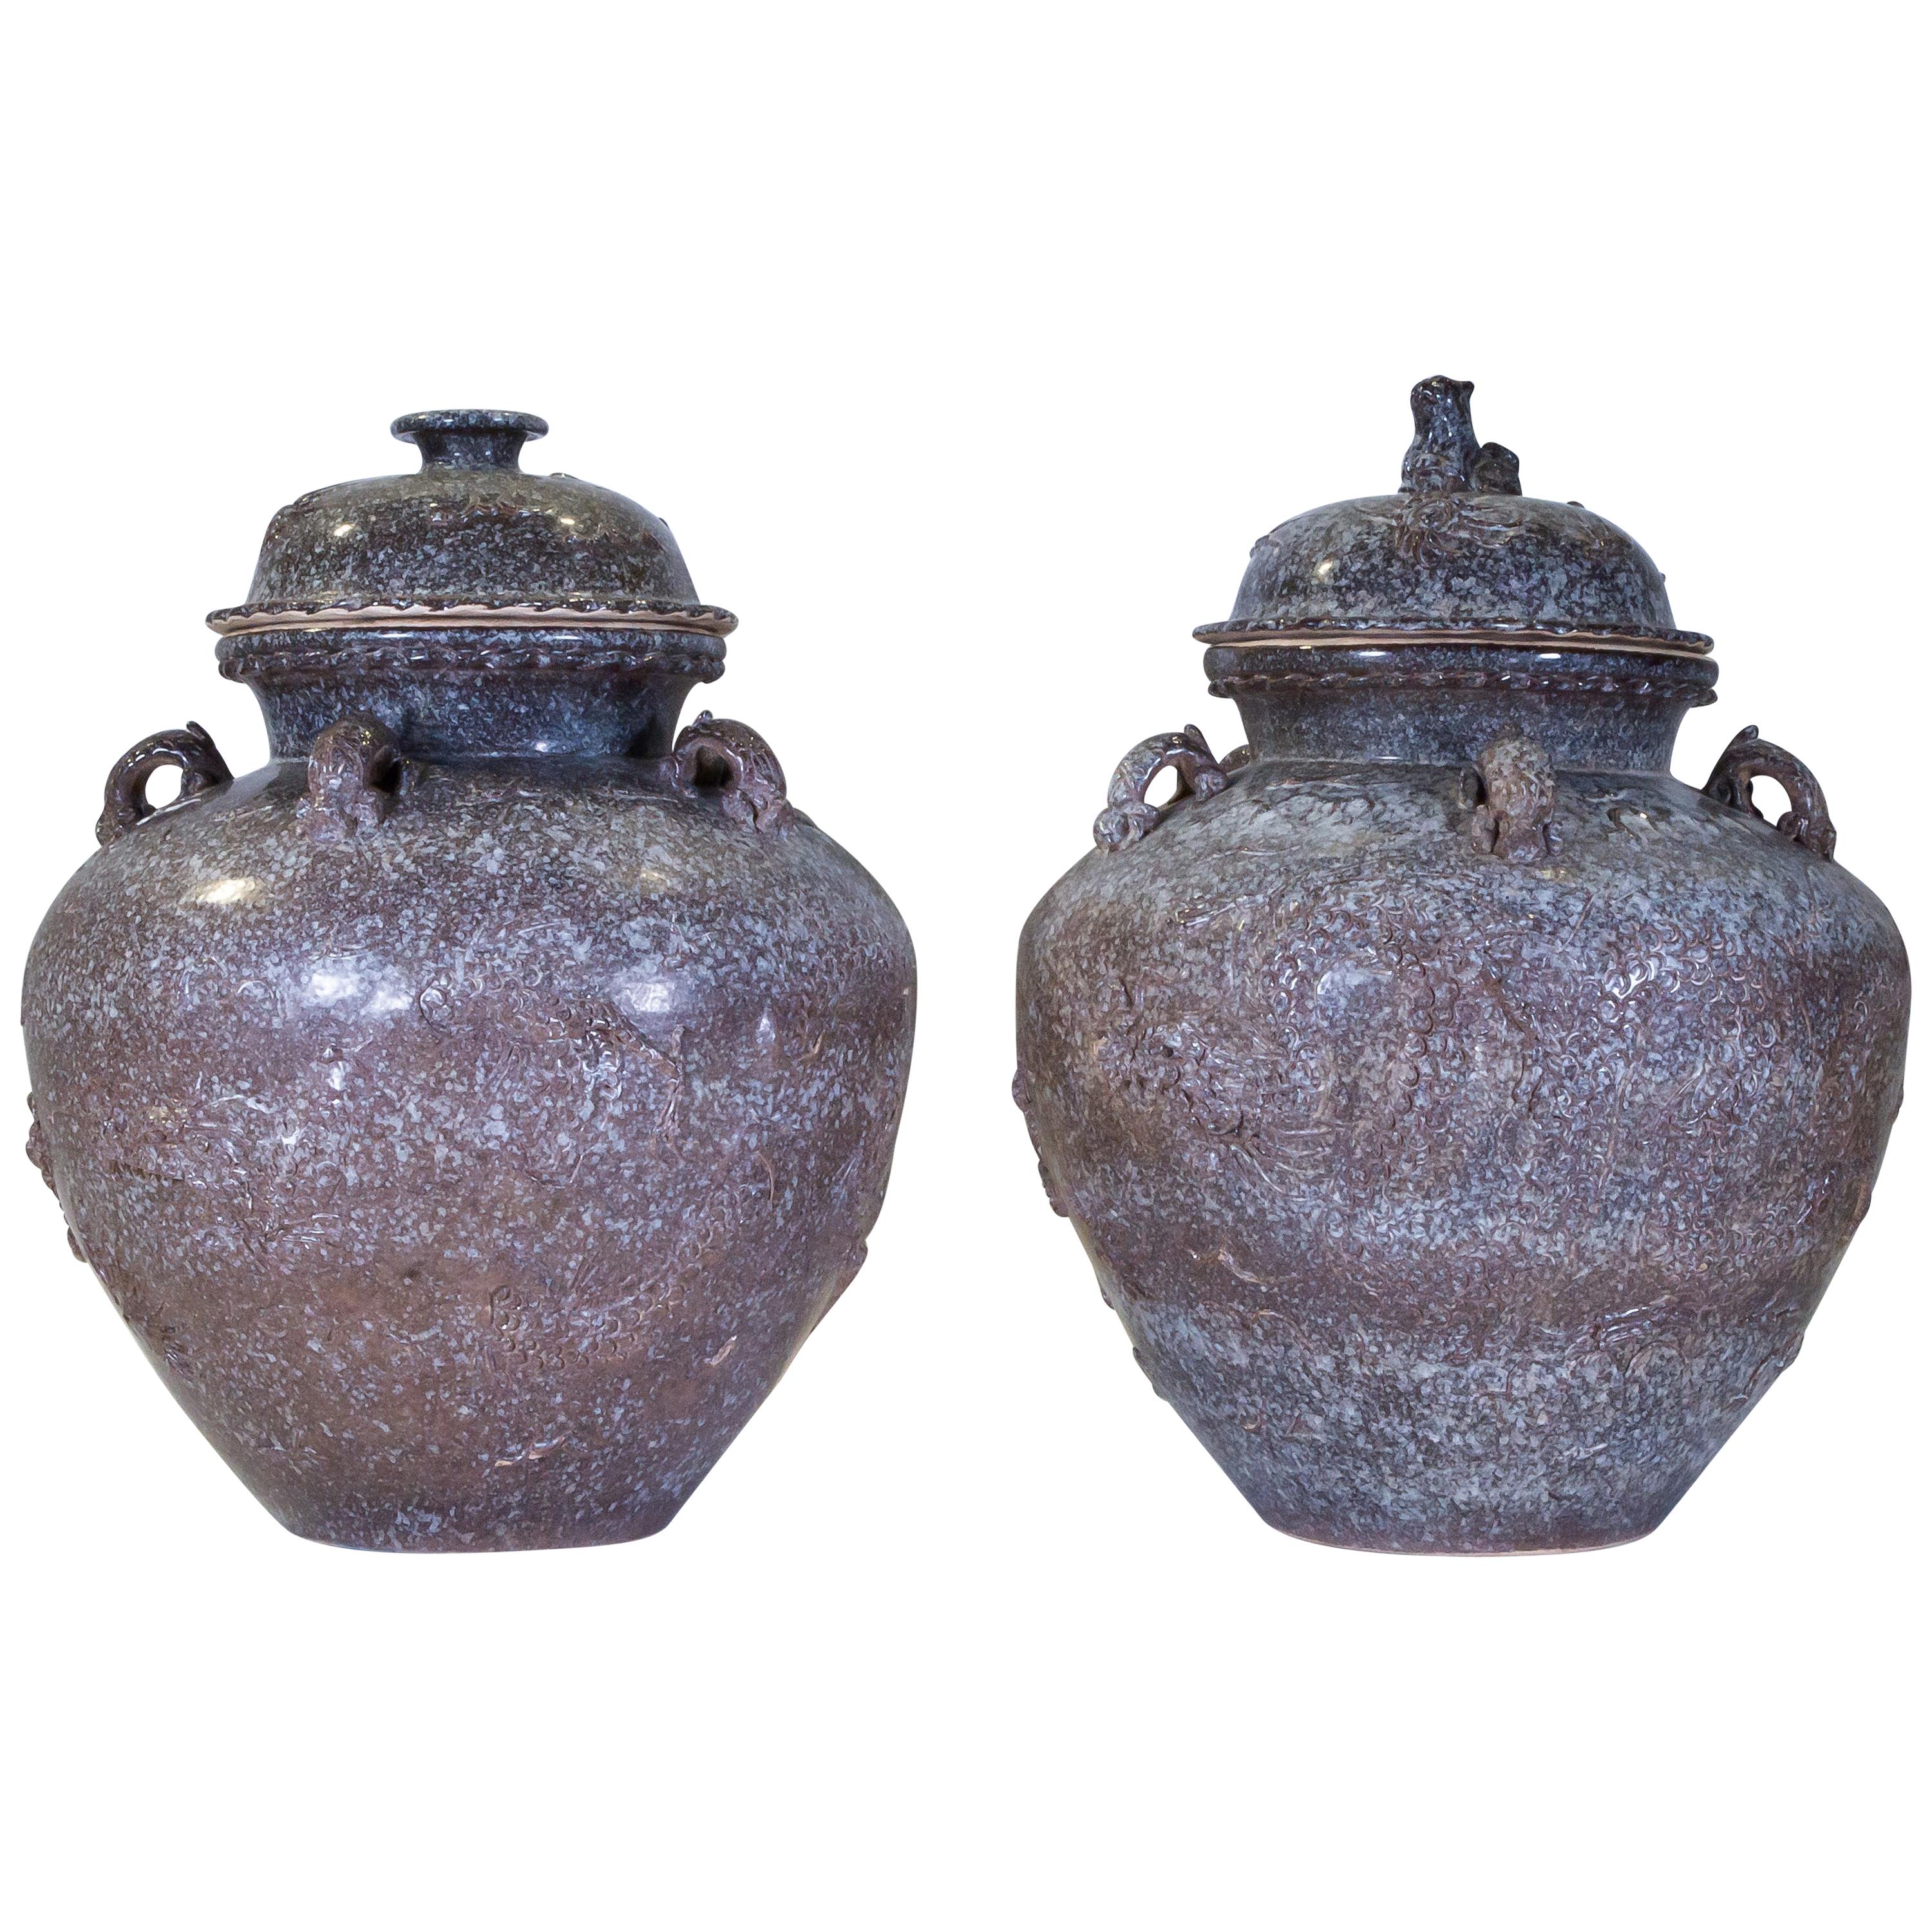 Pr Faux Swedish Porphyry Ceramic Covered Vases w/ Sea Creatures Design in Relief For Sale